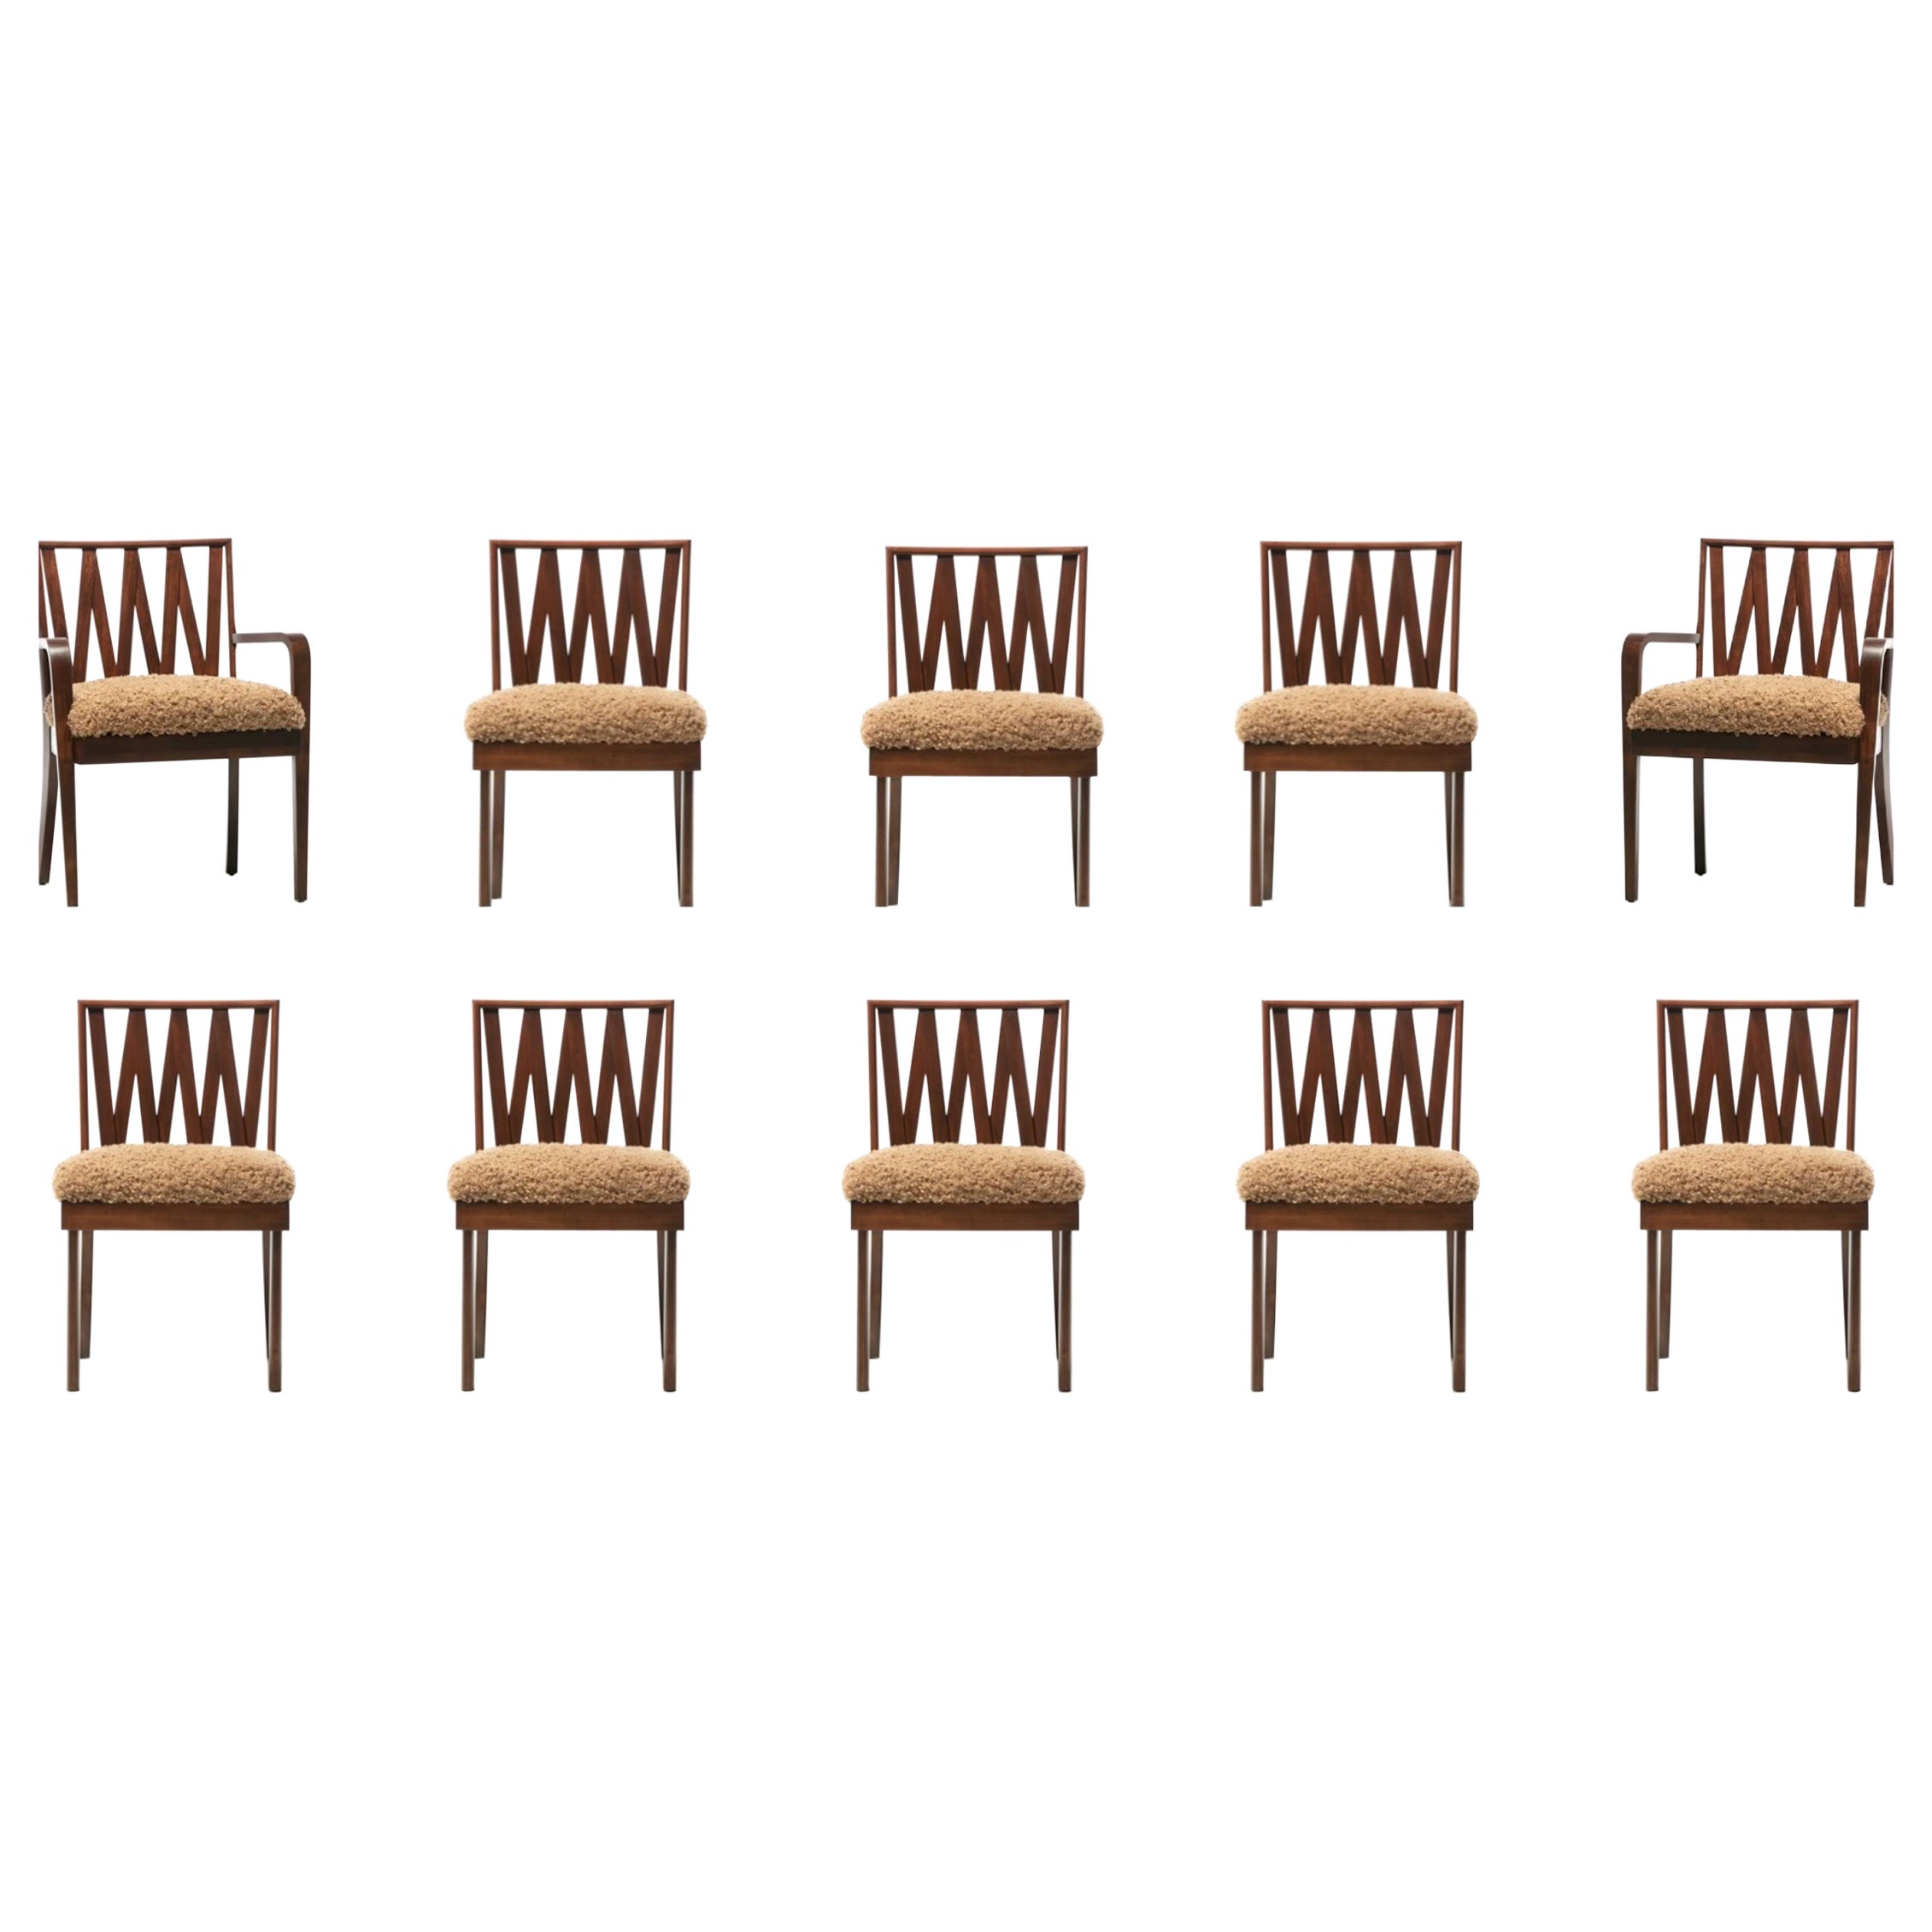 Large Set of 10 Paul Frankl Mid-Century Modern Lattice Dining Chairs, c. 1950